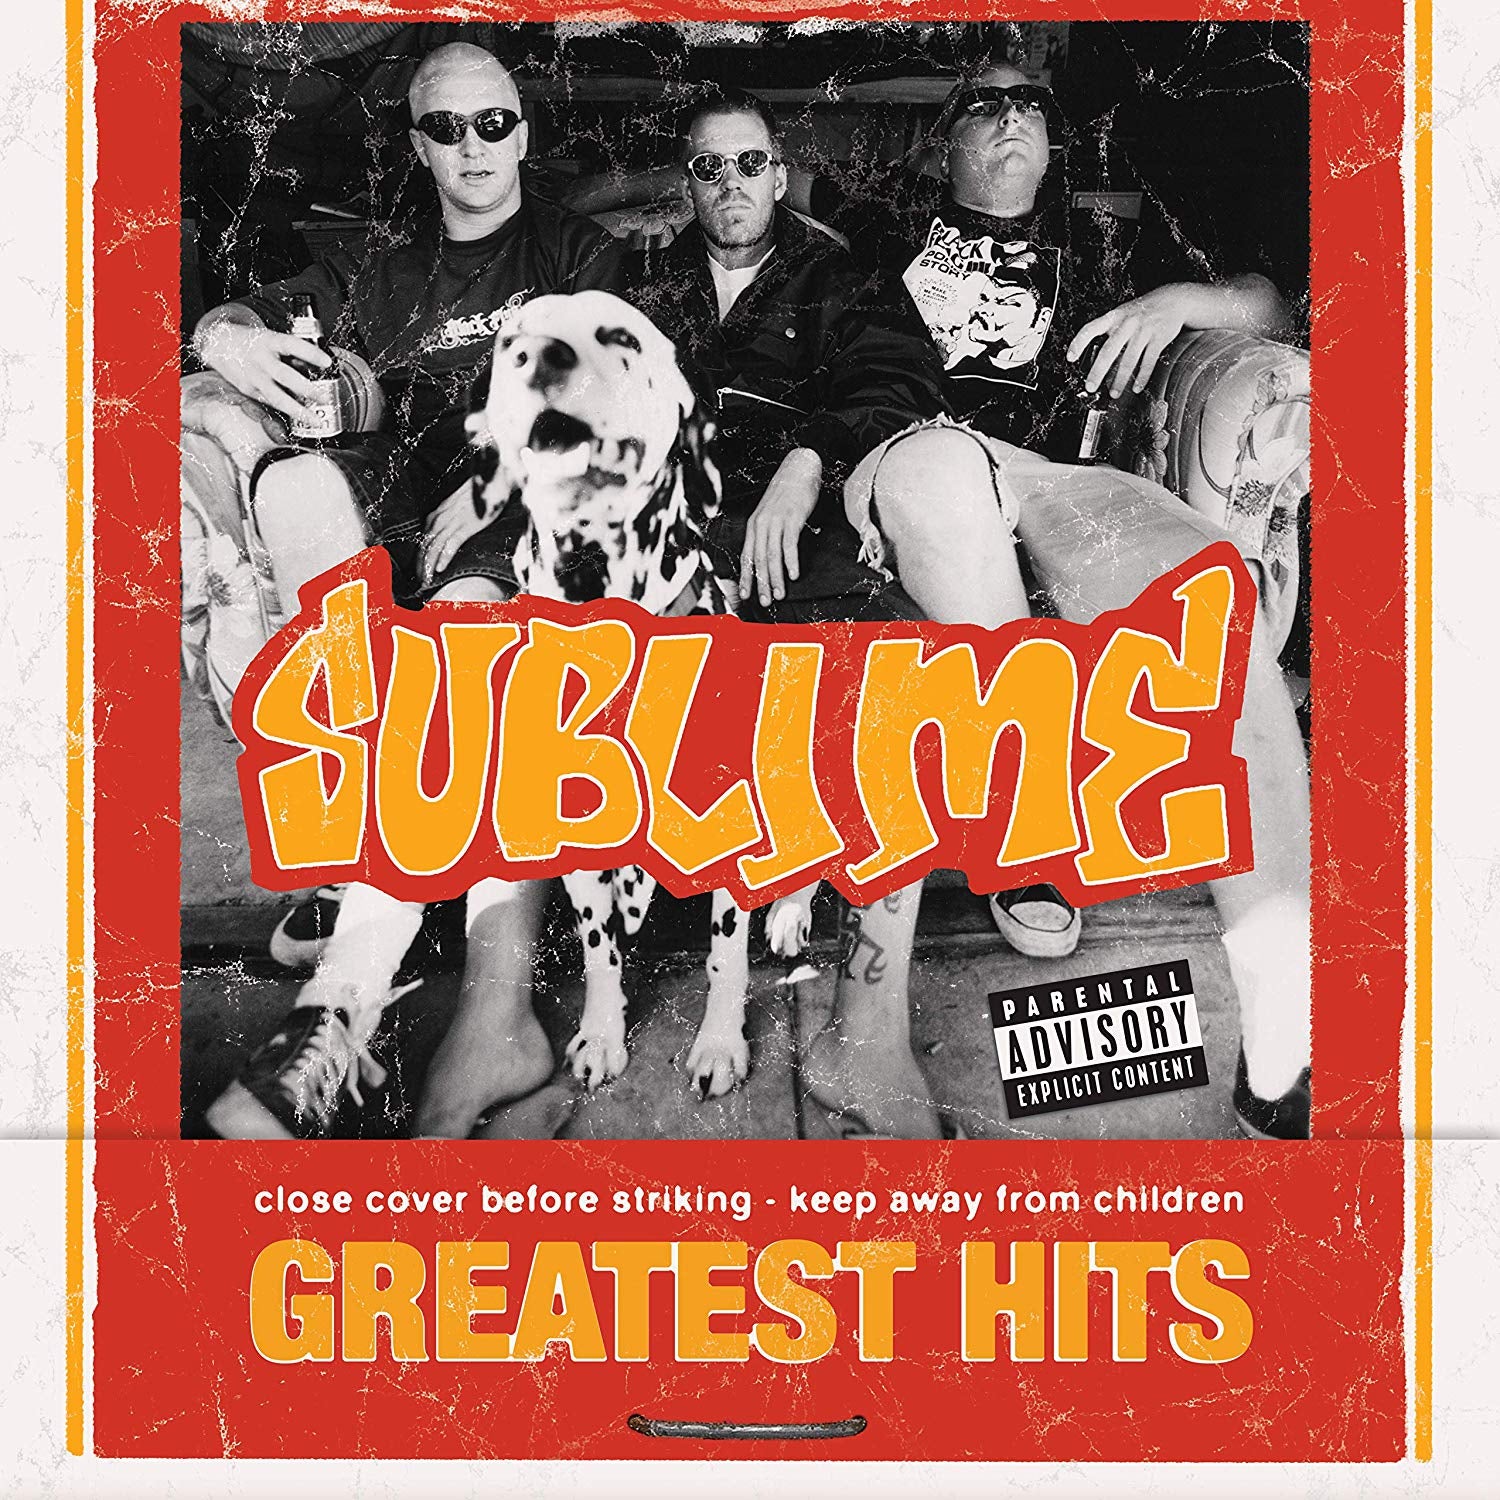 Sublime Greatest Hits Vinyl